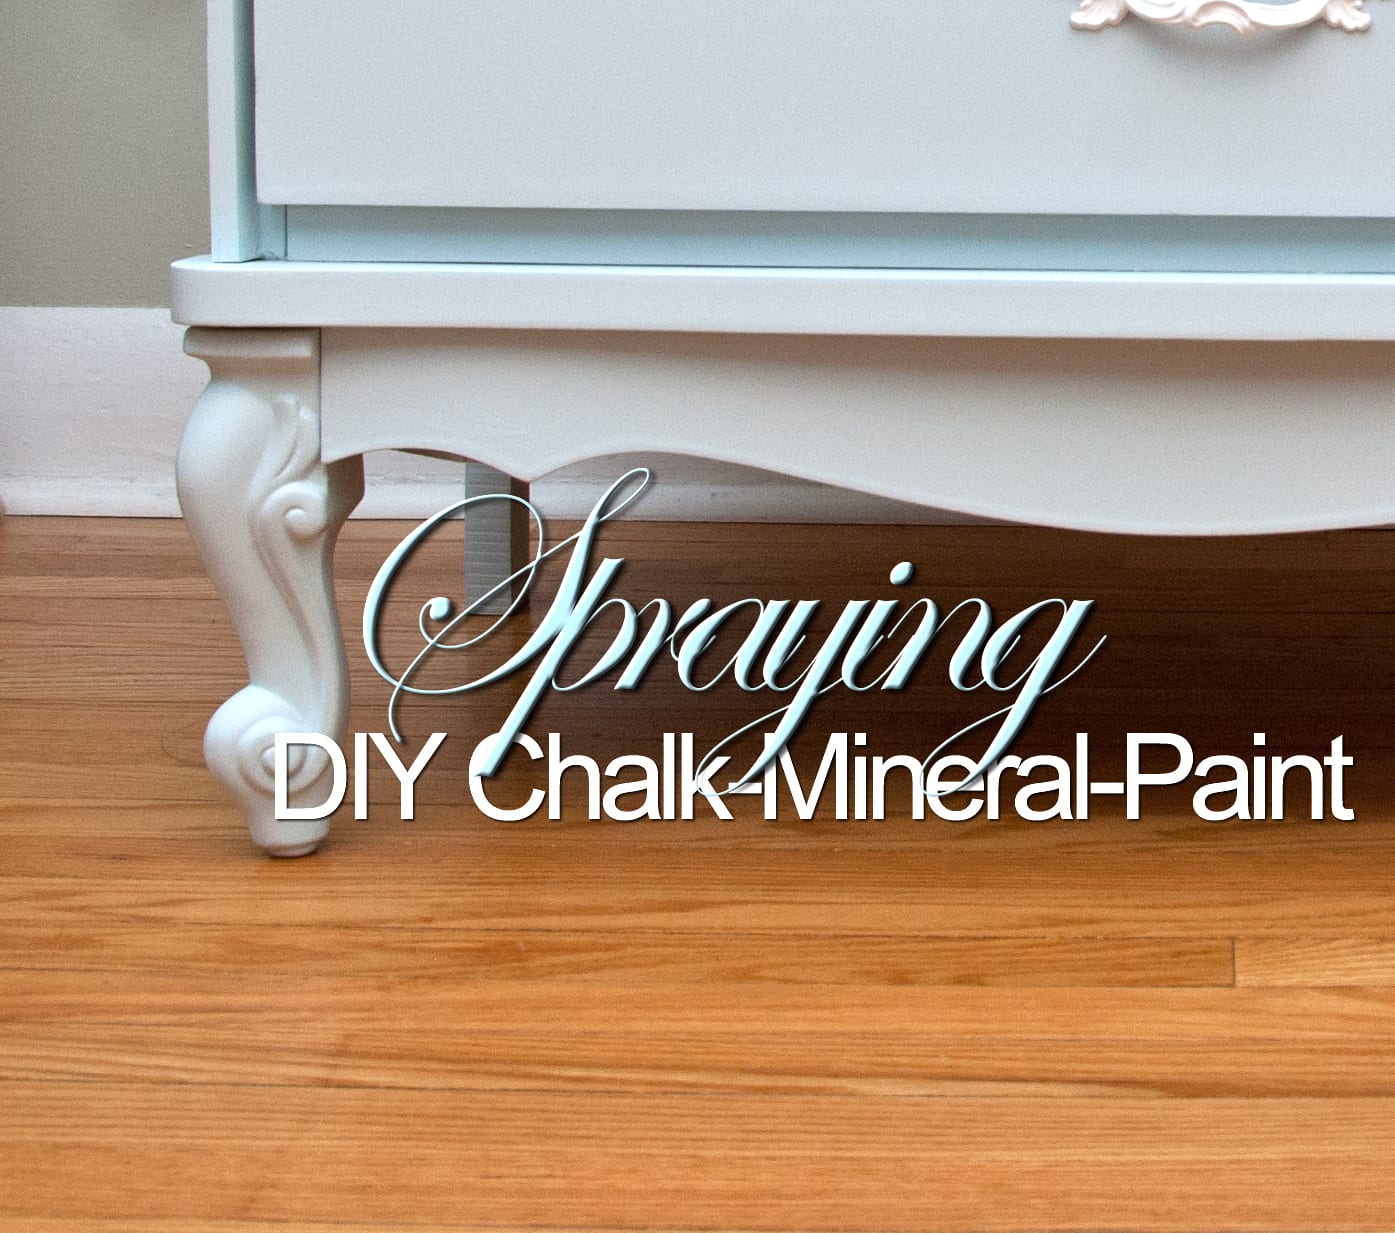 Spraying DIY Chalk-Mineral-Paint Finally Got Around To Doing It